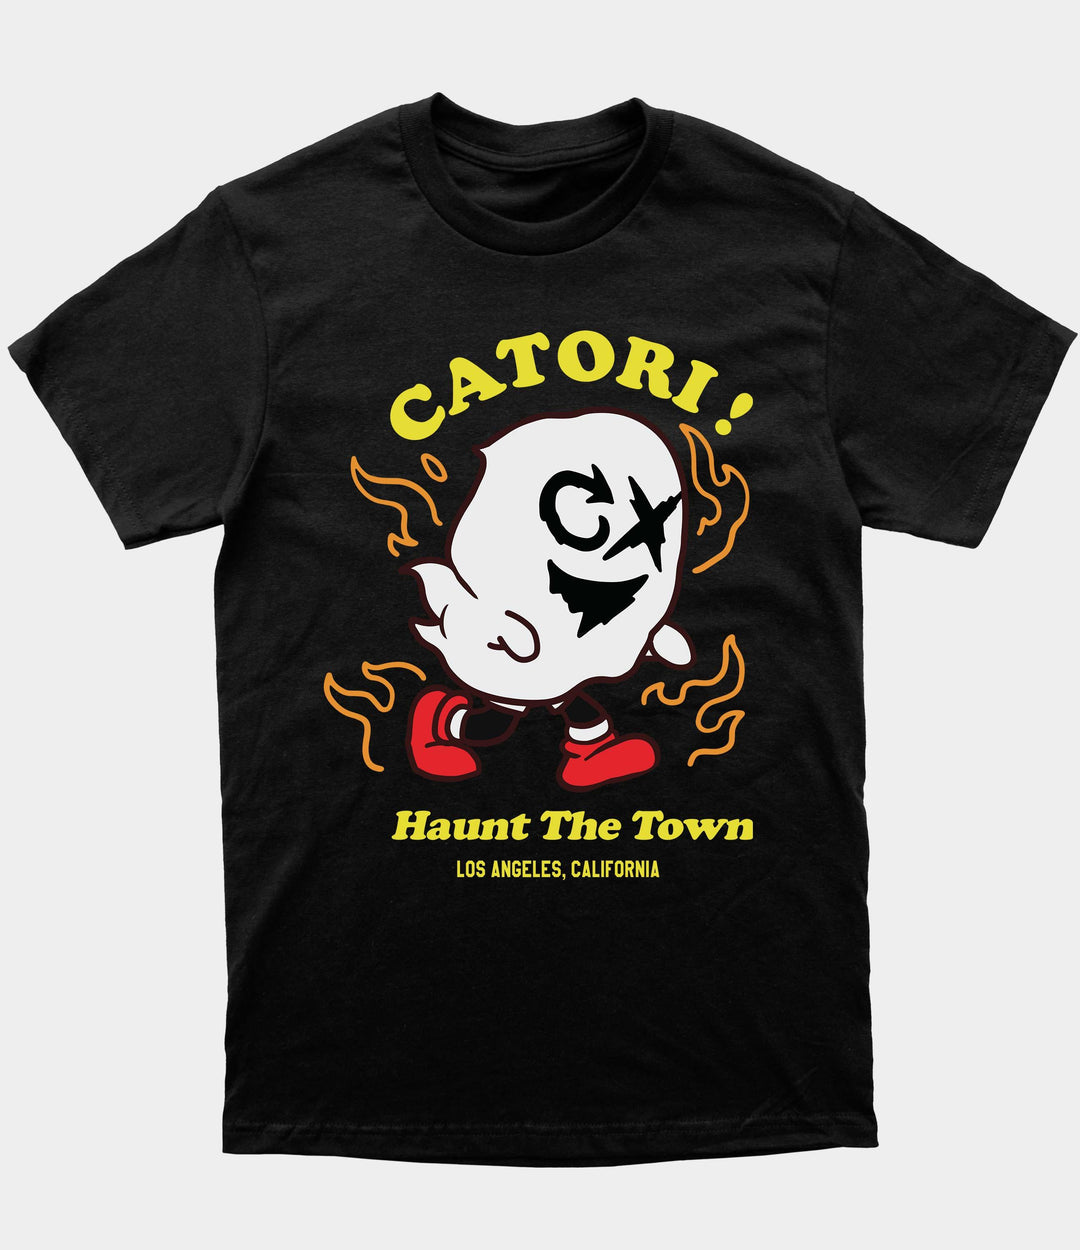 Haunt the Town Tee at Catori Clothing | Graphic & Anime Tees, Hoodies & Sweatshirts 